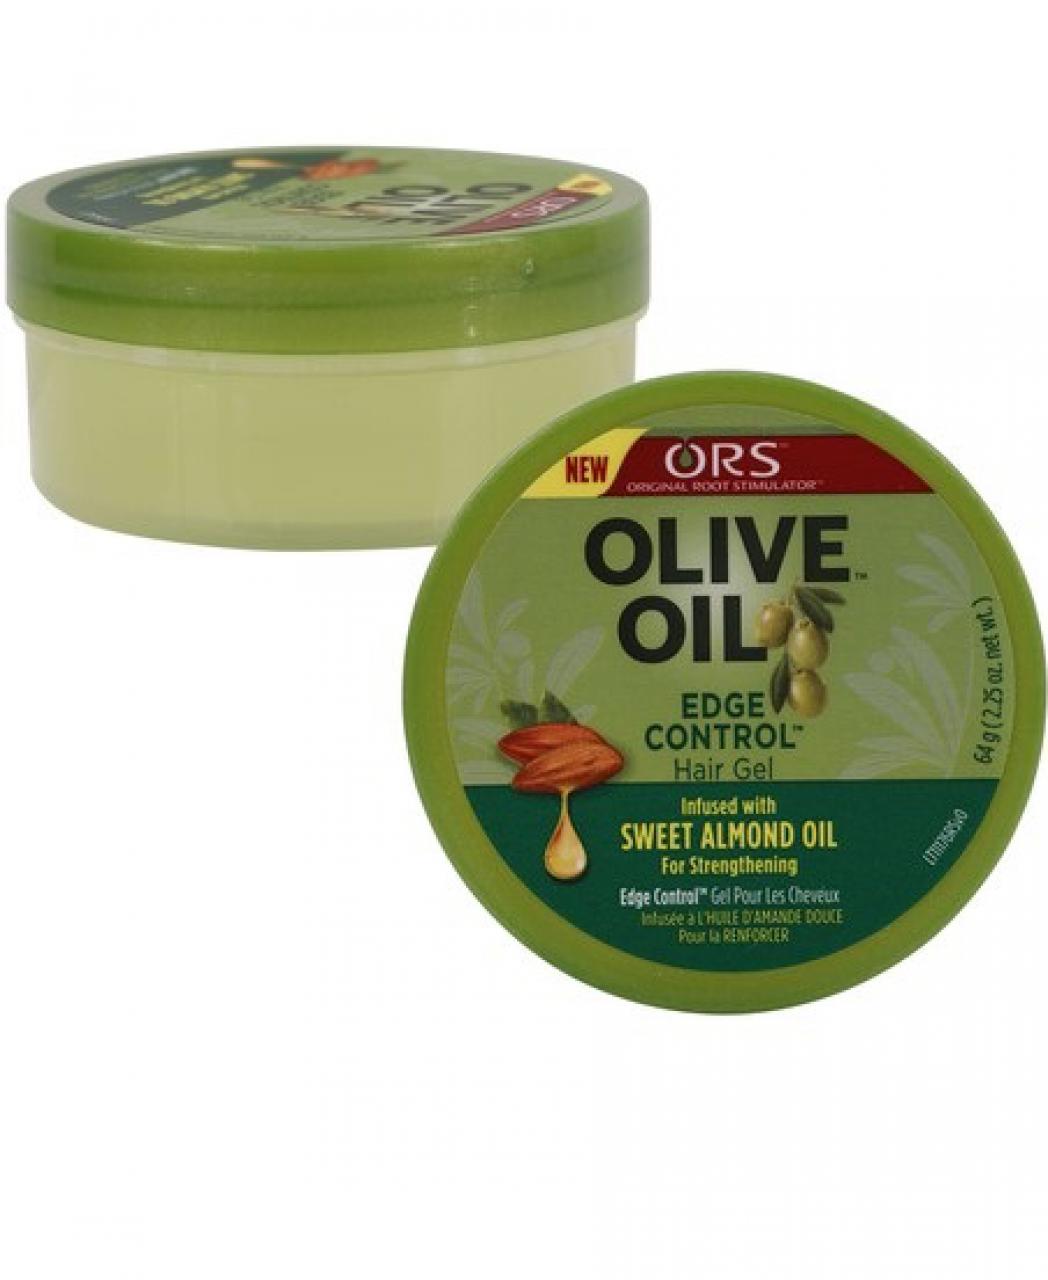 Olive oil edge-control